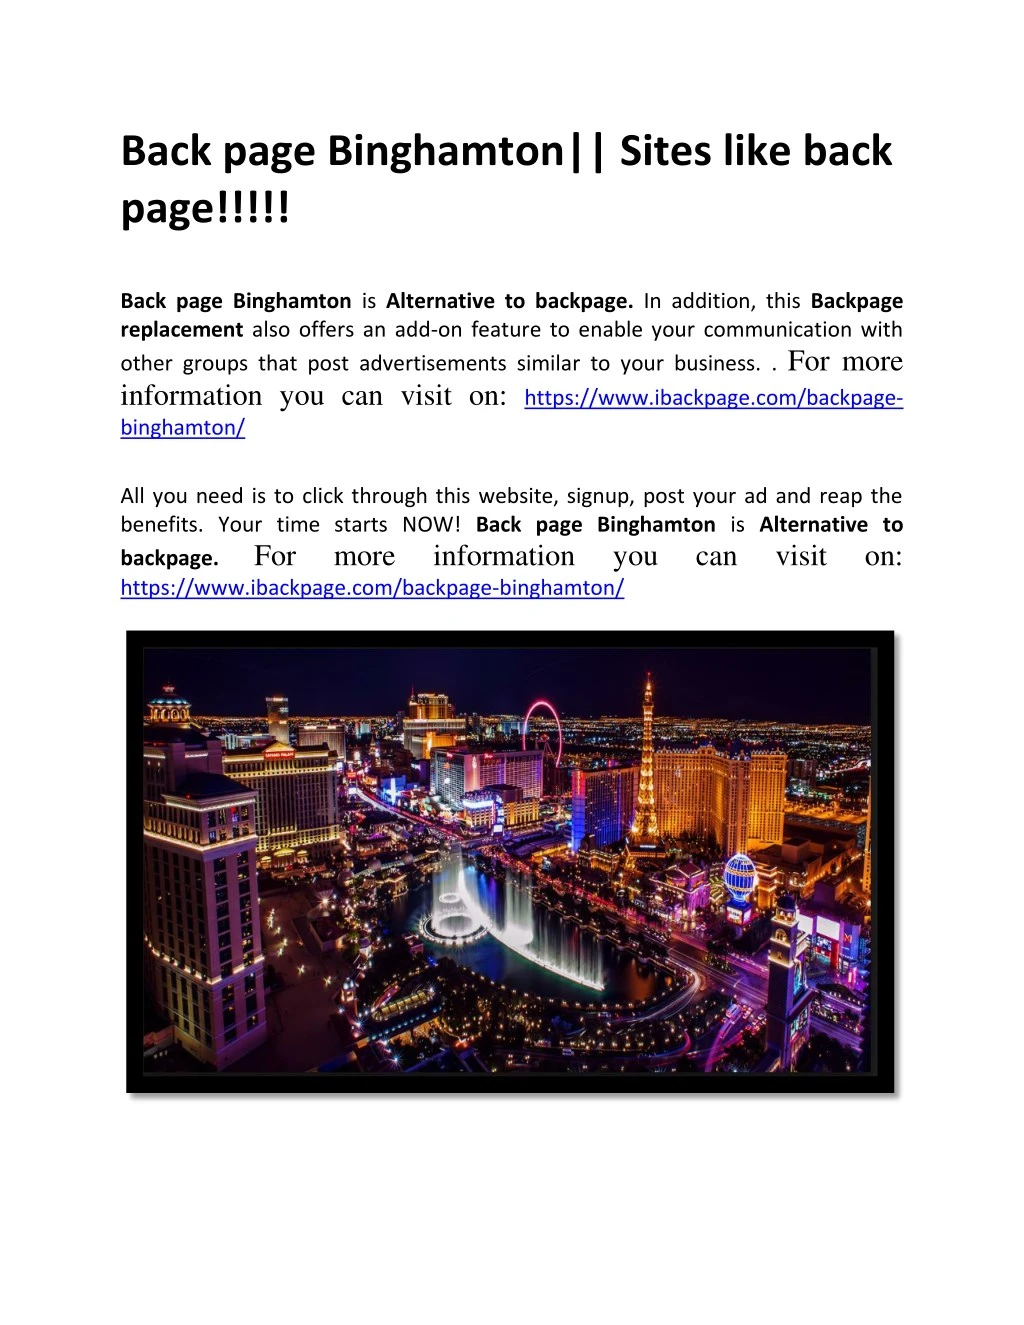 back page binghamton sites like back page back